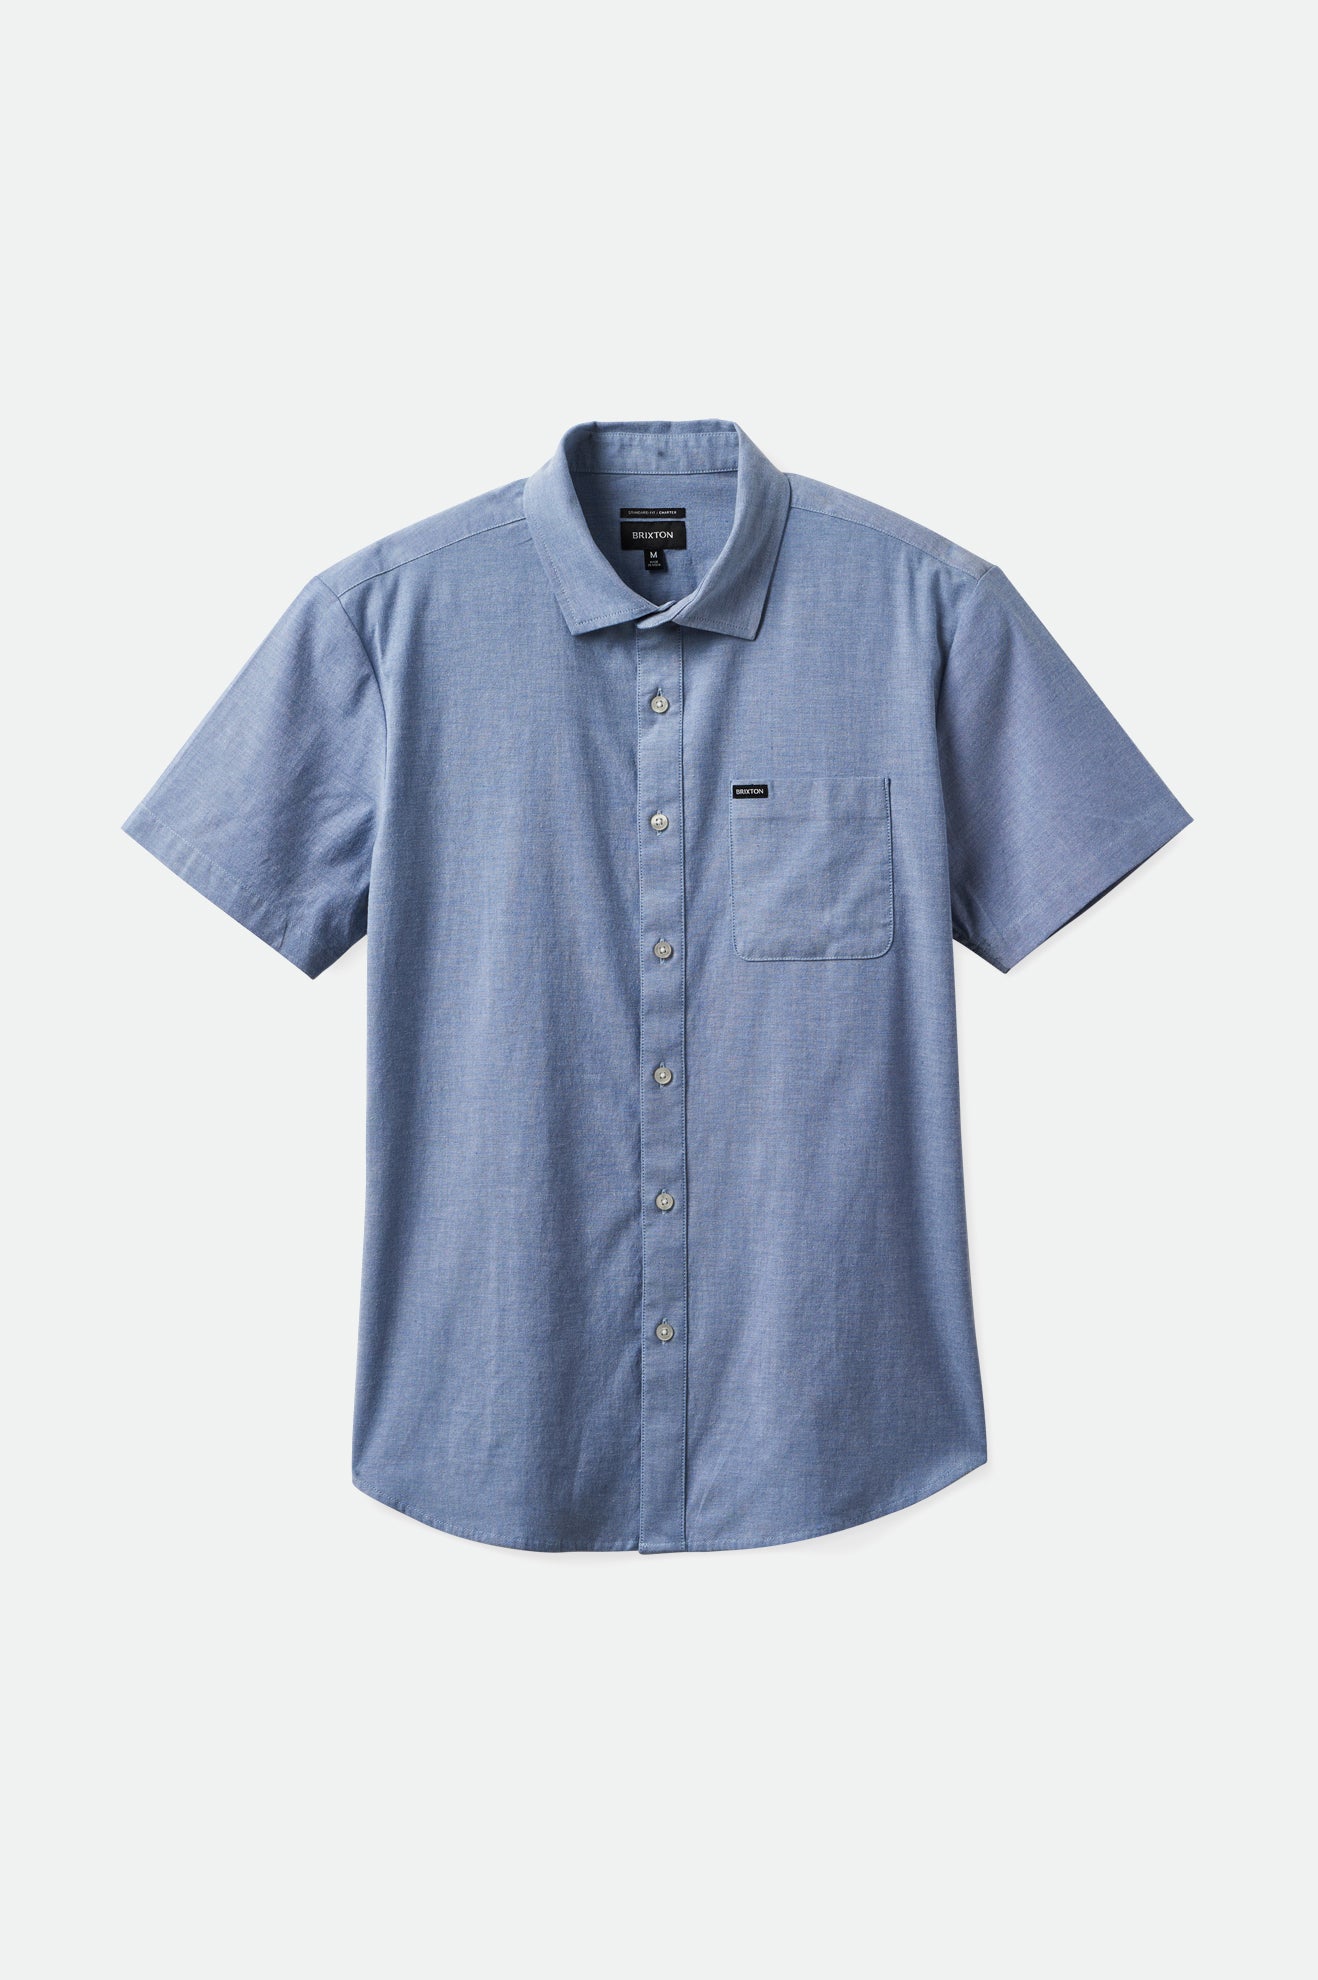 Charter Oxford S/S Woven Shirt - Light Blue Chambray